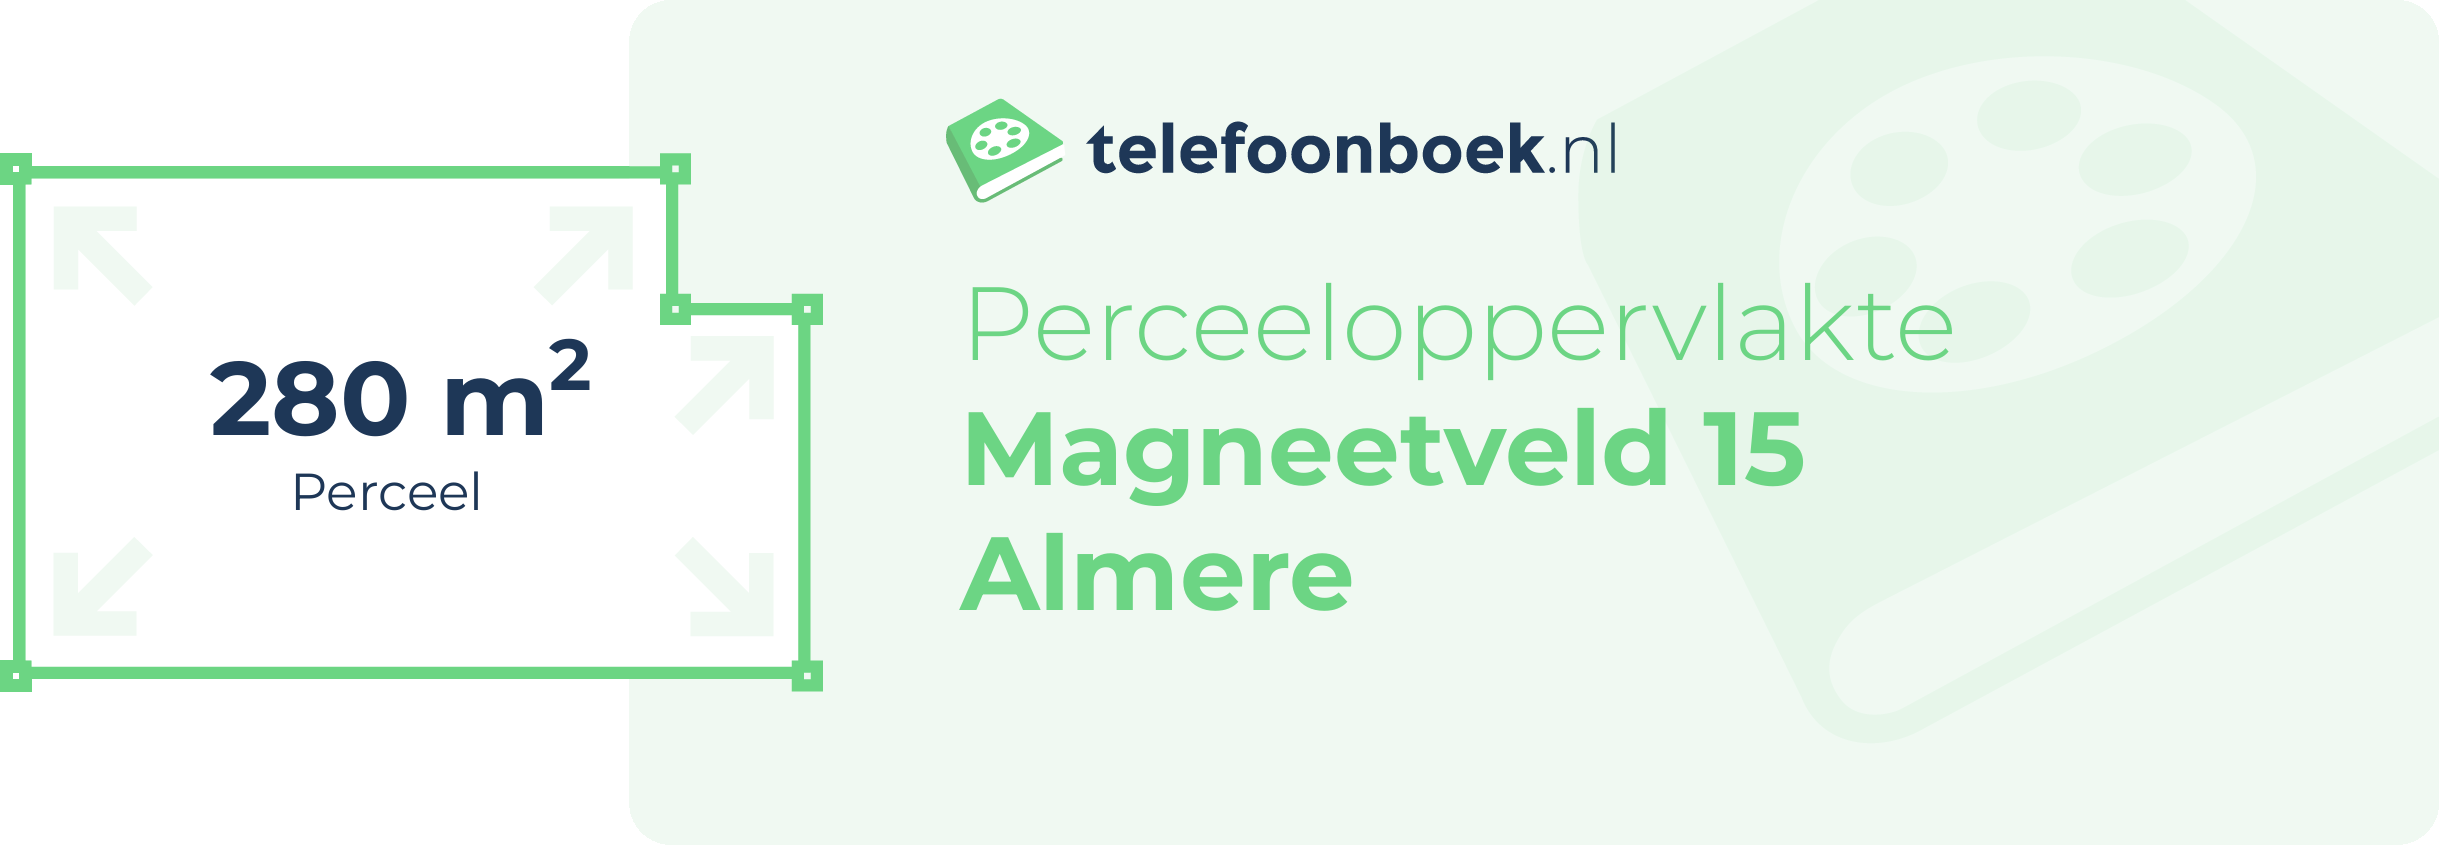 Perceeloppervlakte Magneetveld 15 Almere